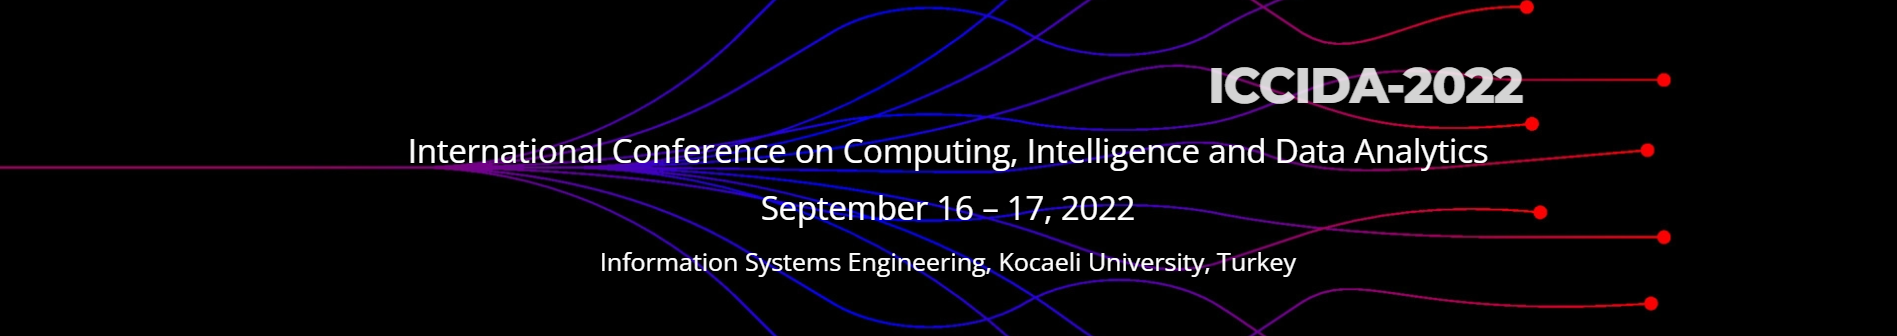 International Conference on Computing Intelligence and Data Analytics – ICCIDA 2022